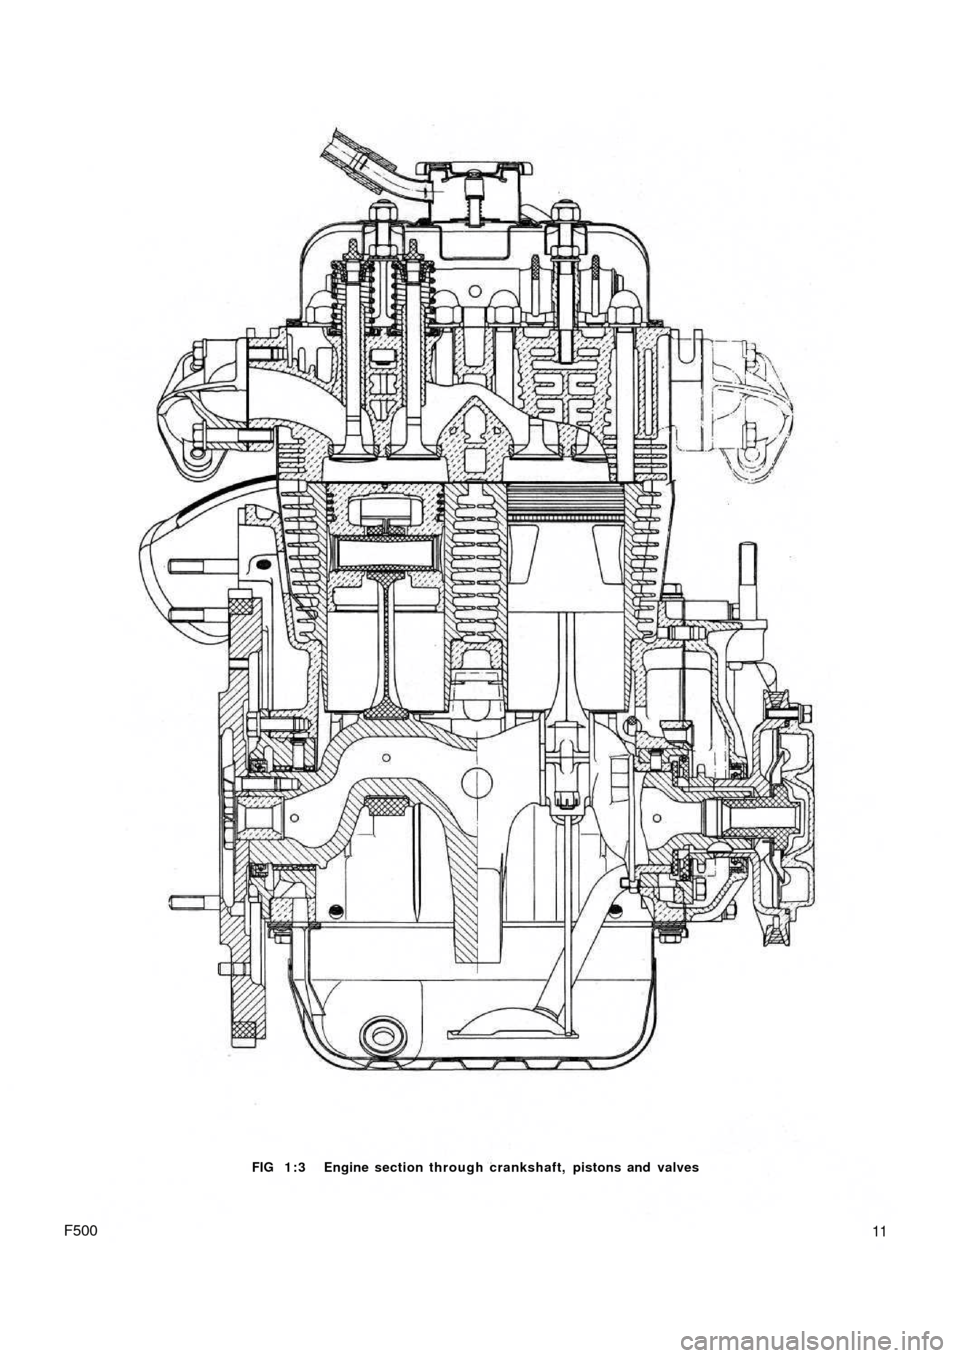 FIAT 500 1960 1.G Workshop Manual FIG 1 : 3  Engine section through crankshaft, pistons and  valves
F50011 